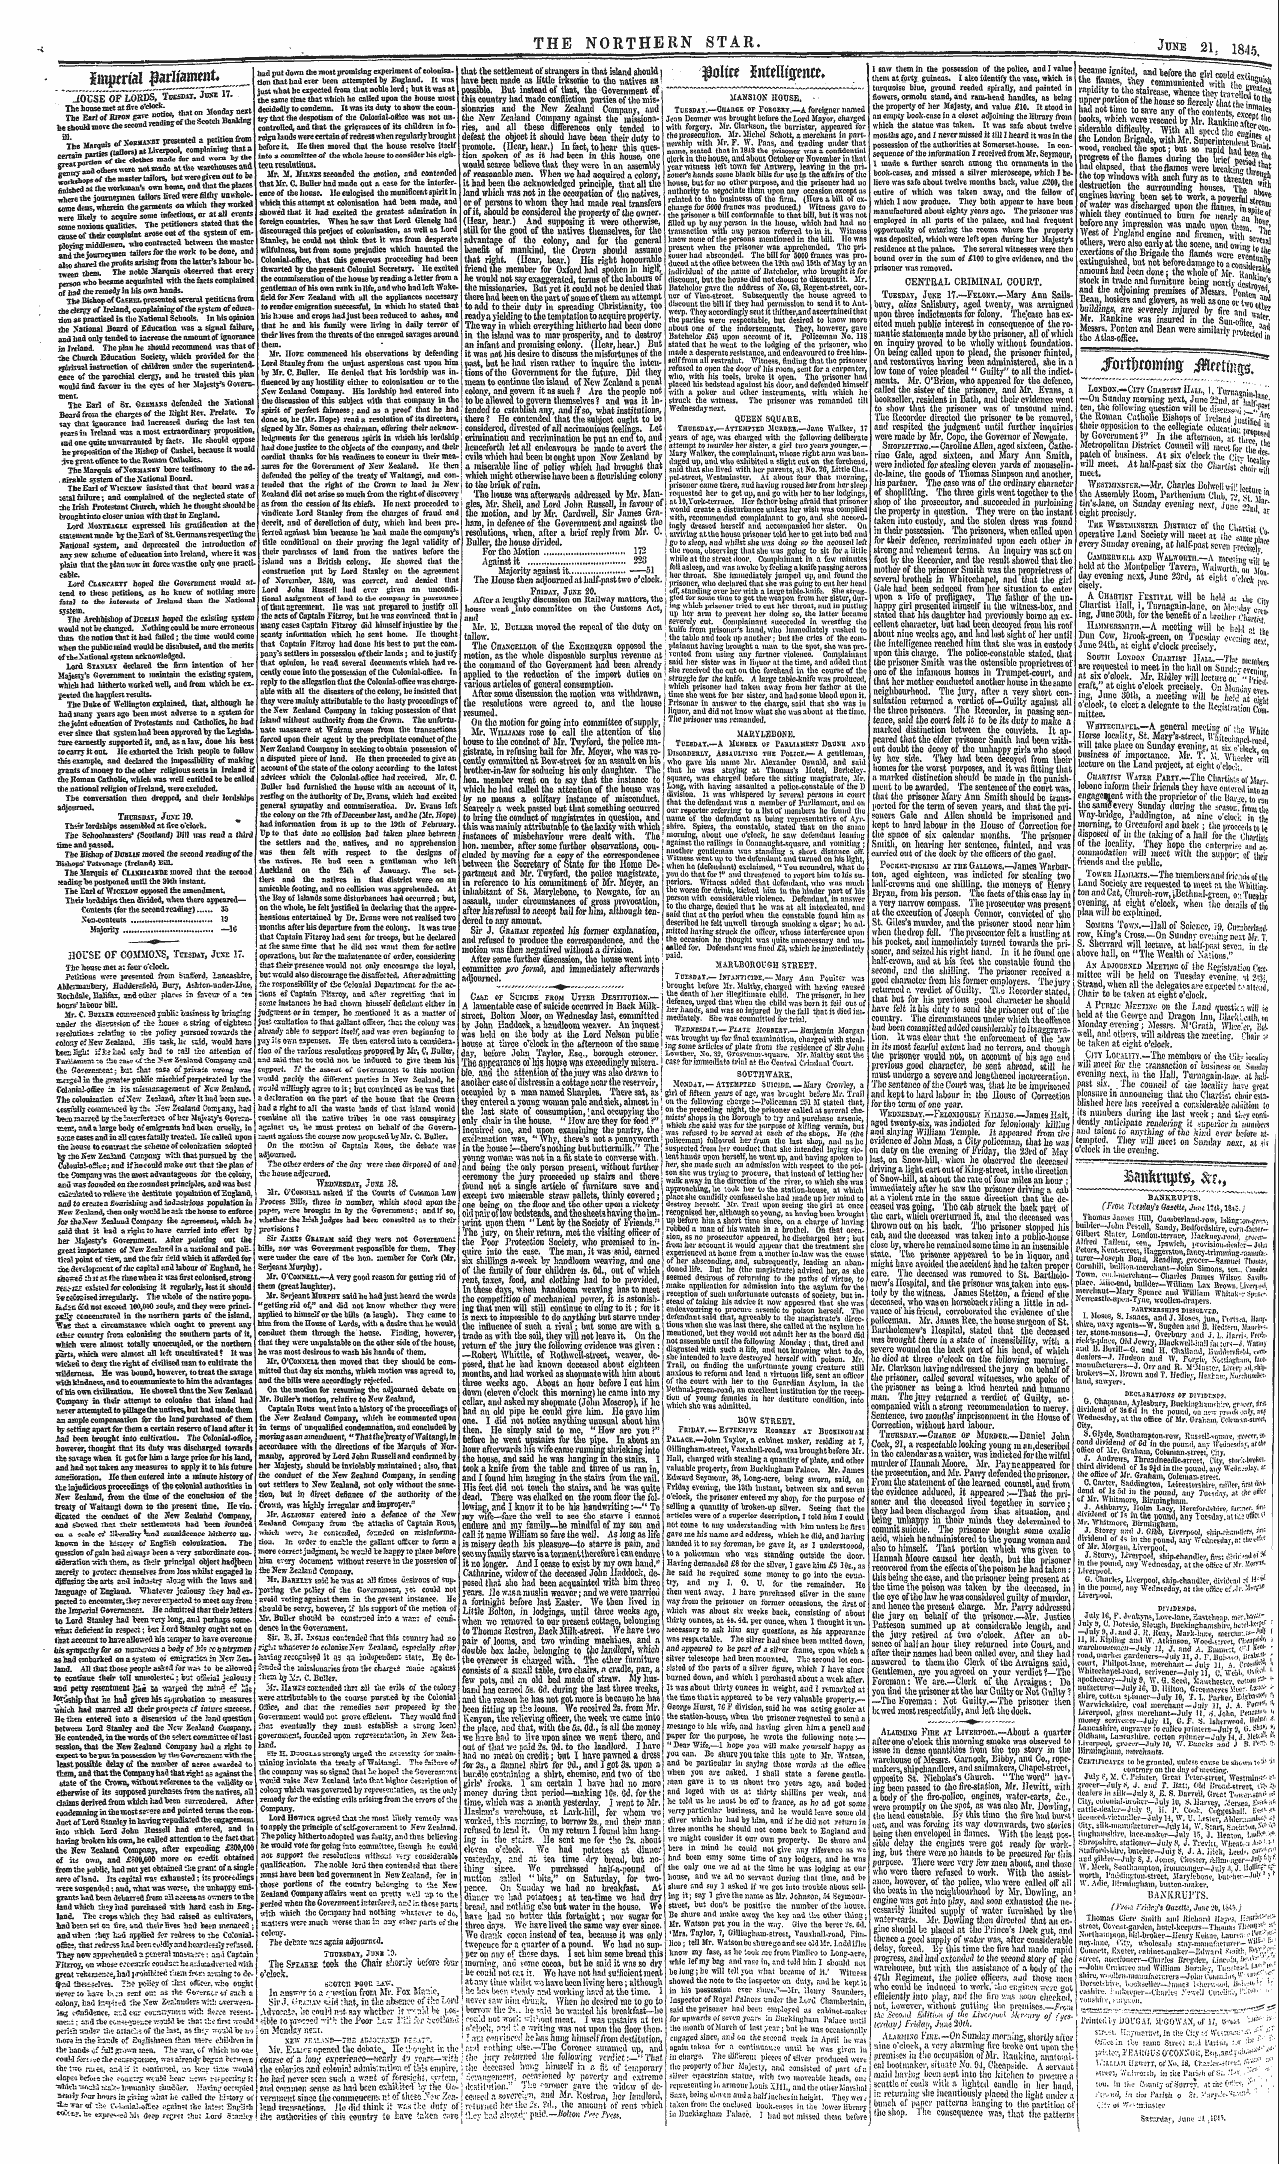 Northern Star (1837-1852): jS F Y, 3rd edition - .'.Oe;Tee Same .-Jtrte* A:.-.L T'Ars-I.I...